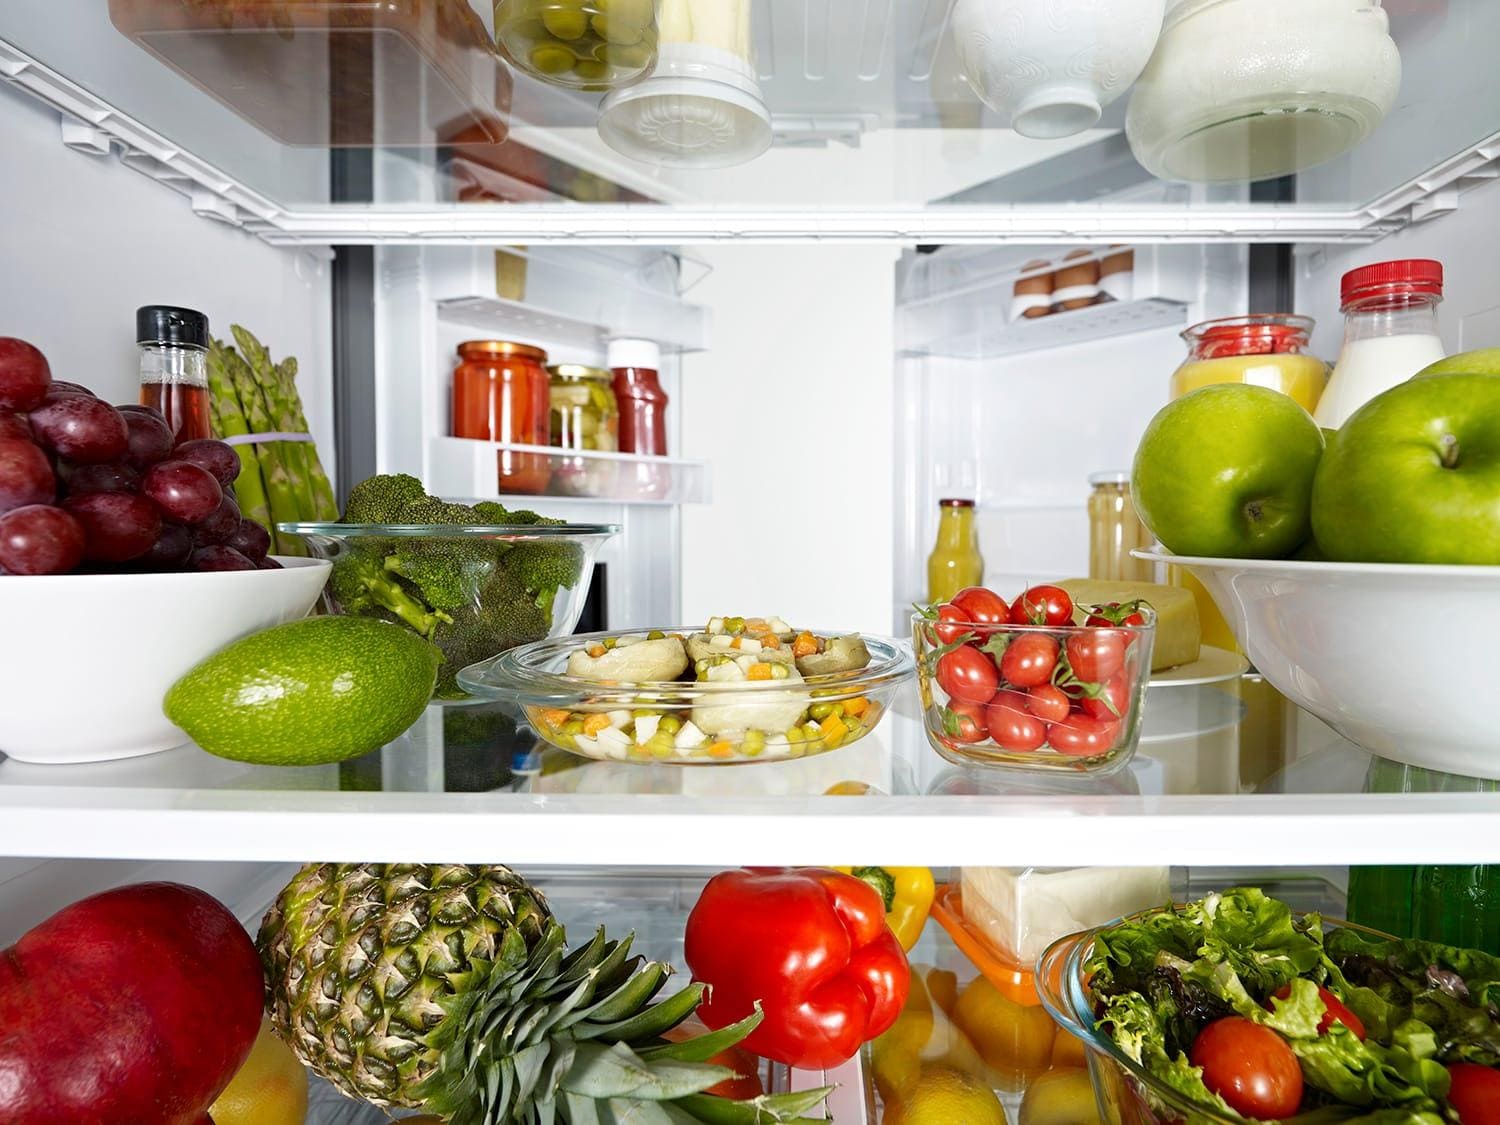 Food in open refrigerator